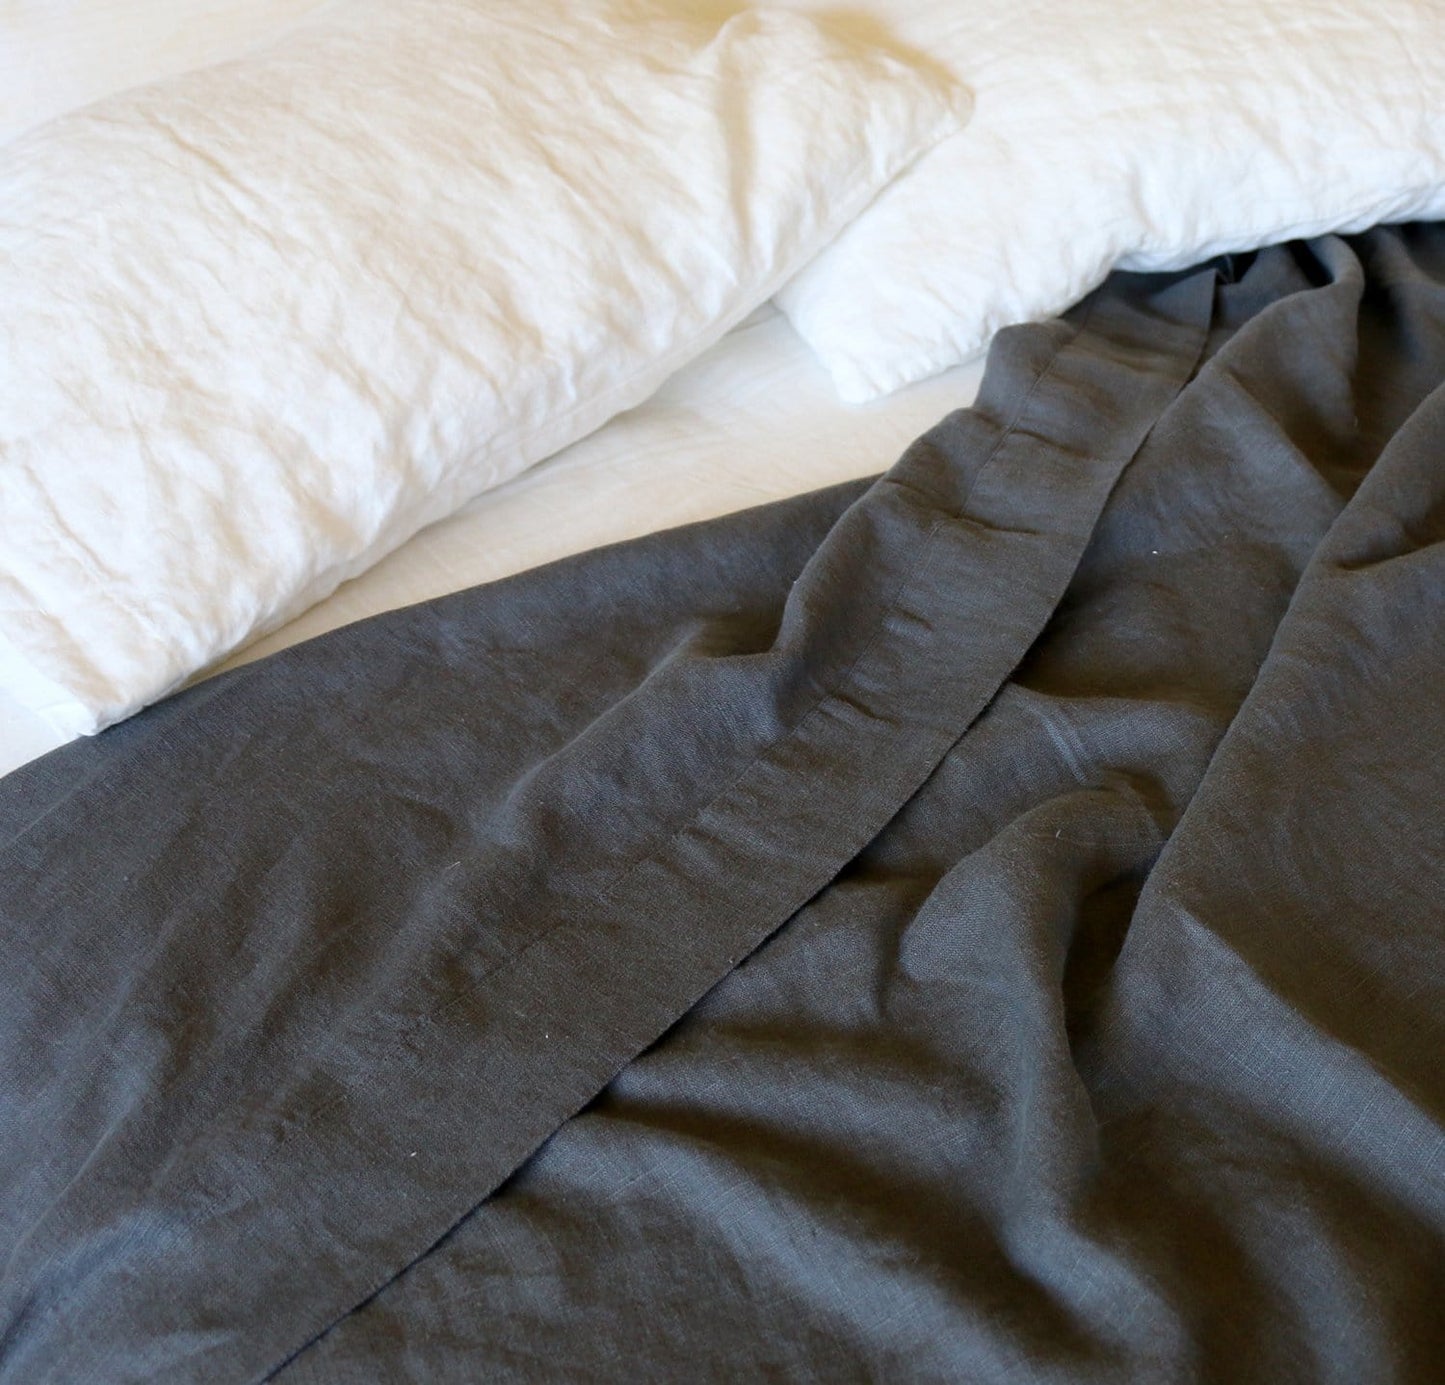 white and dark grey charcoal linen summer bedding - summer cover lightweight linen blanket